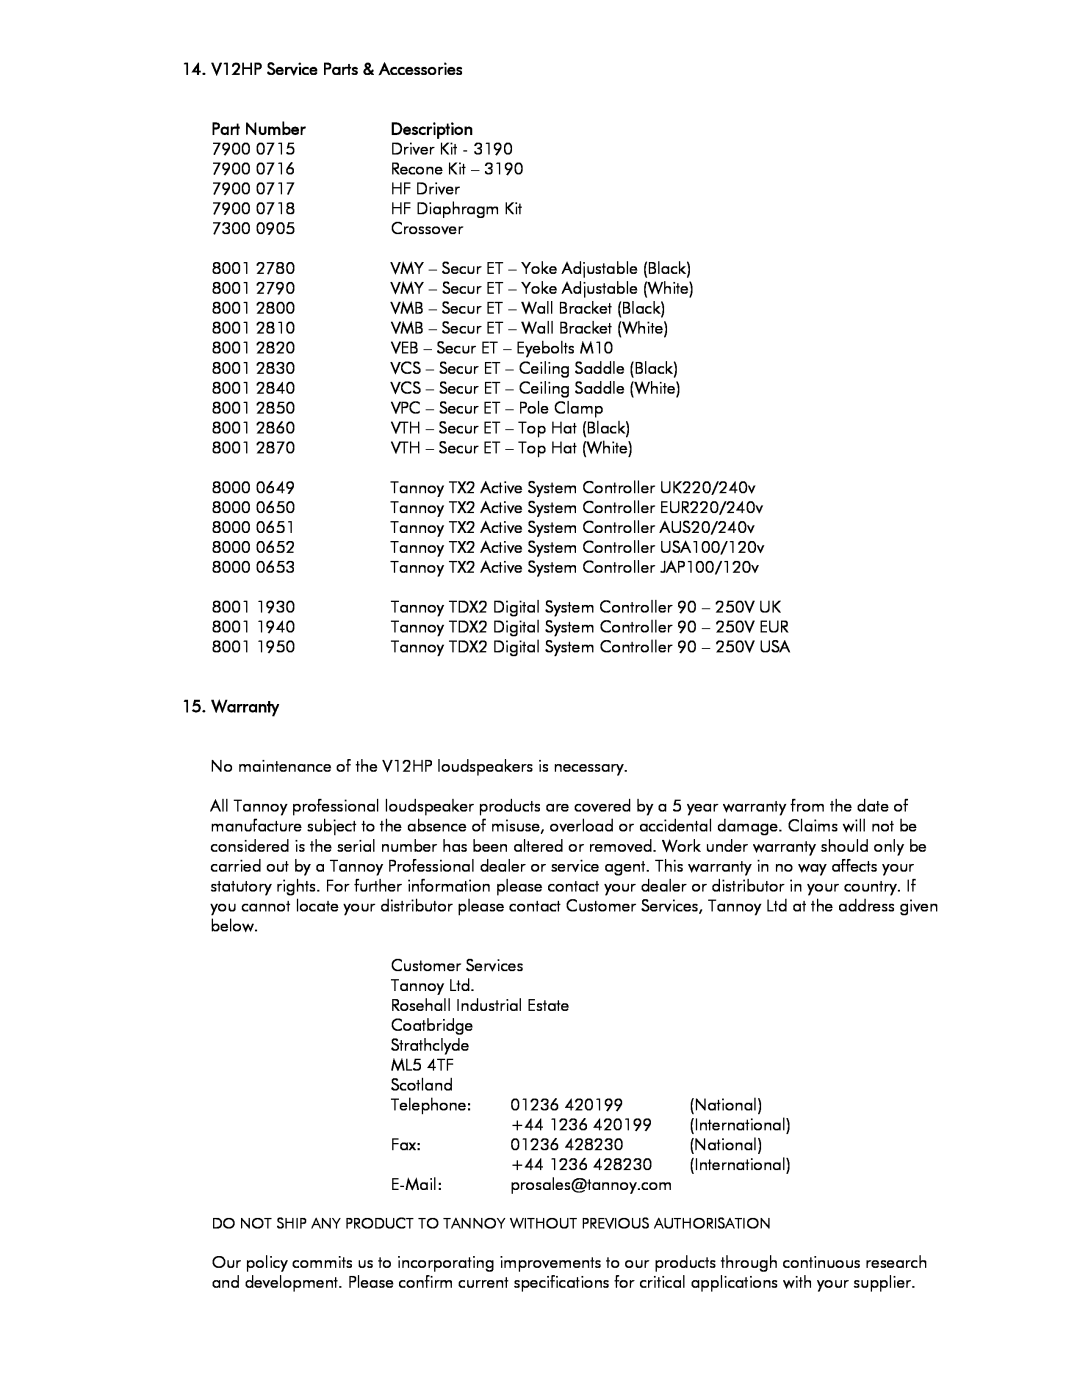 Tannoy V12 HP user manual 14. V12HP Service Parts & Accessories, Part Number, Description, Warranty 